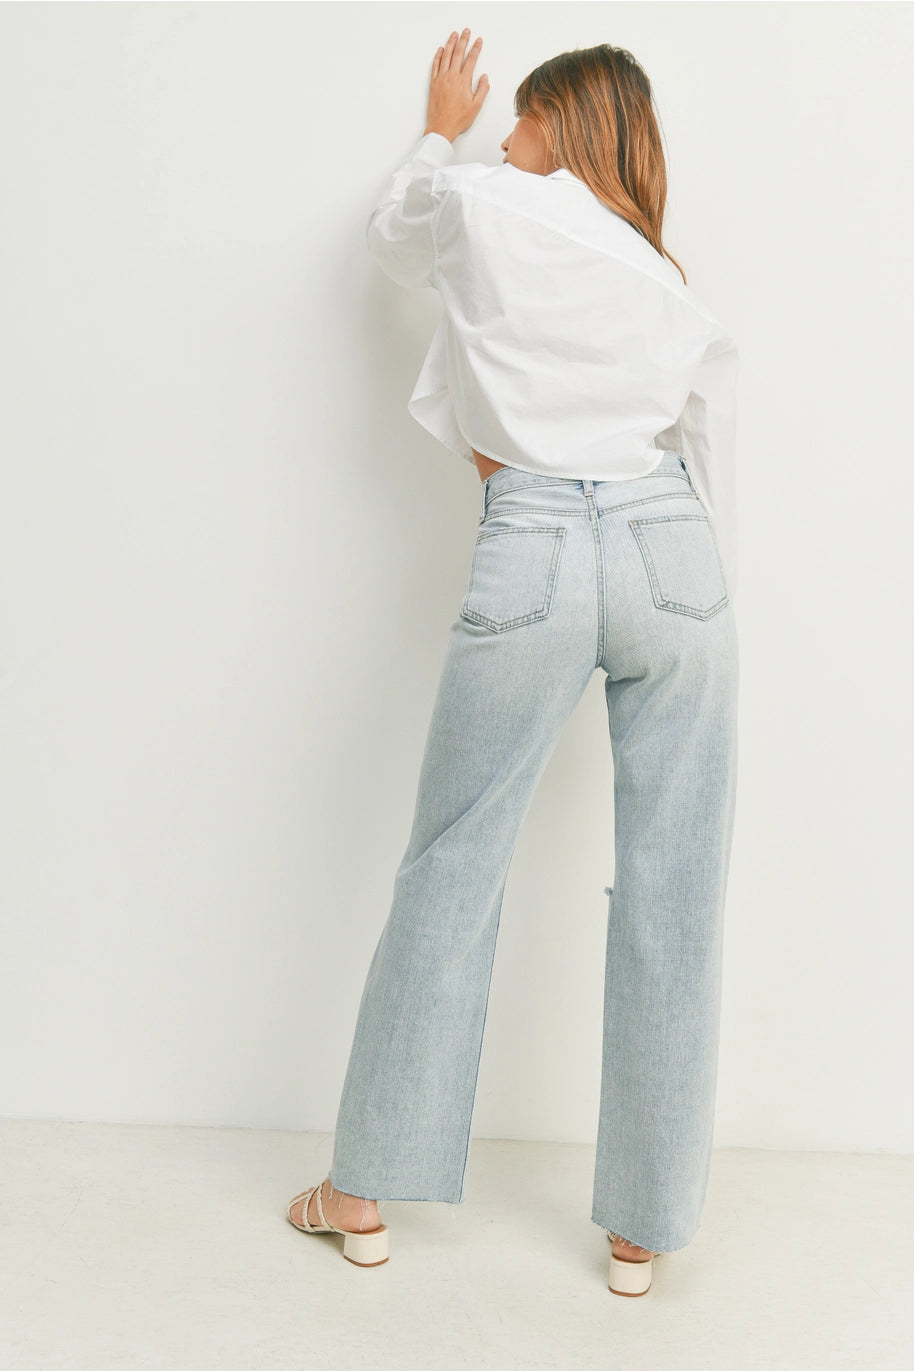 Aubrey Ribcage Jeans